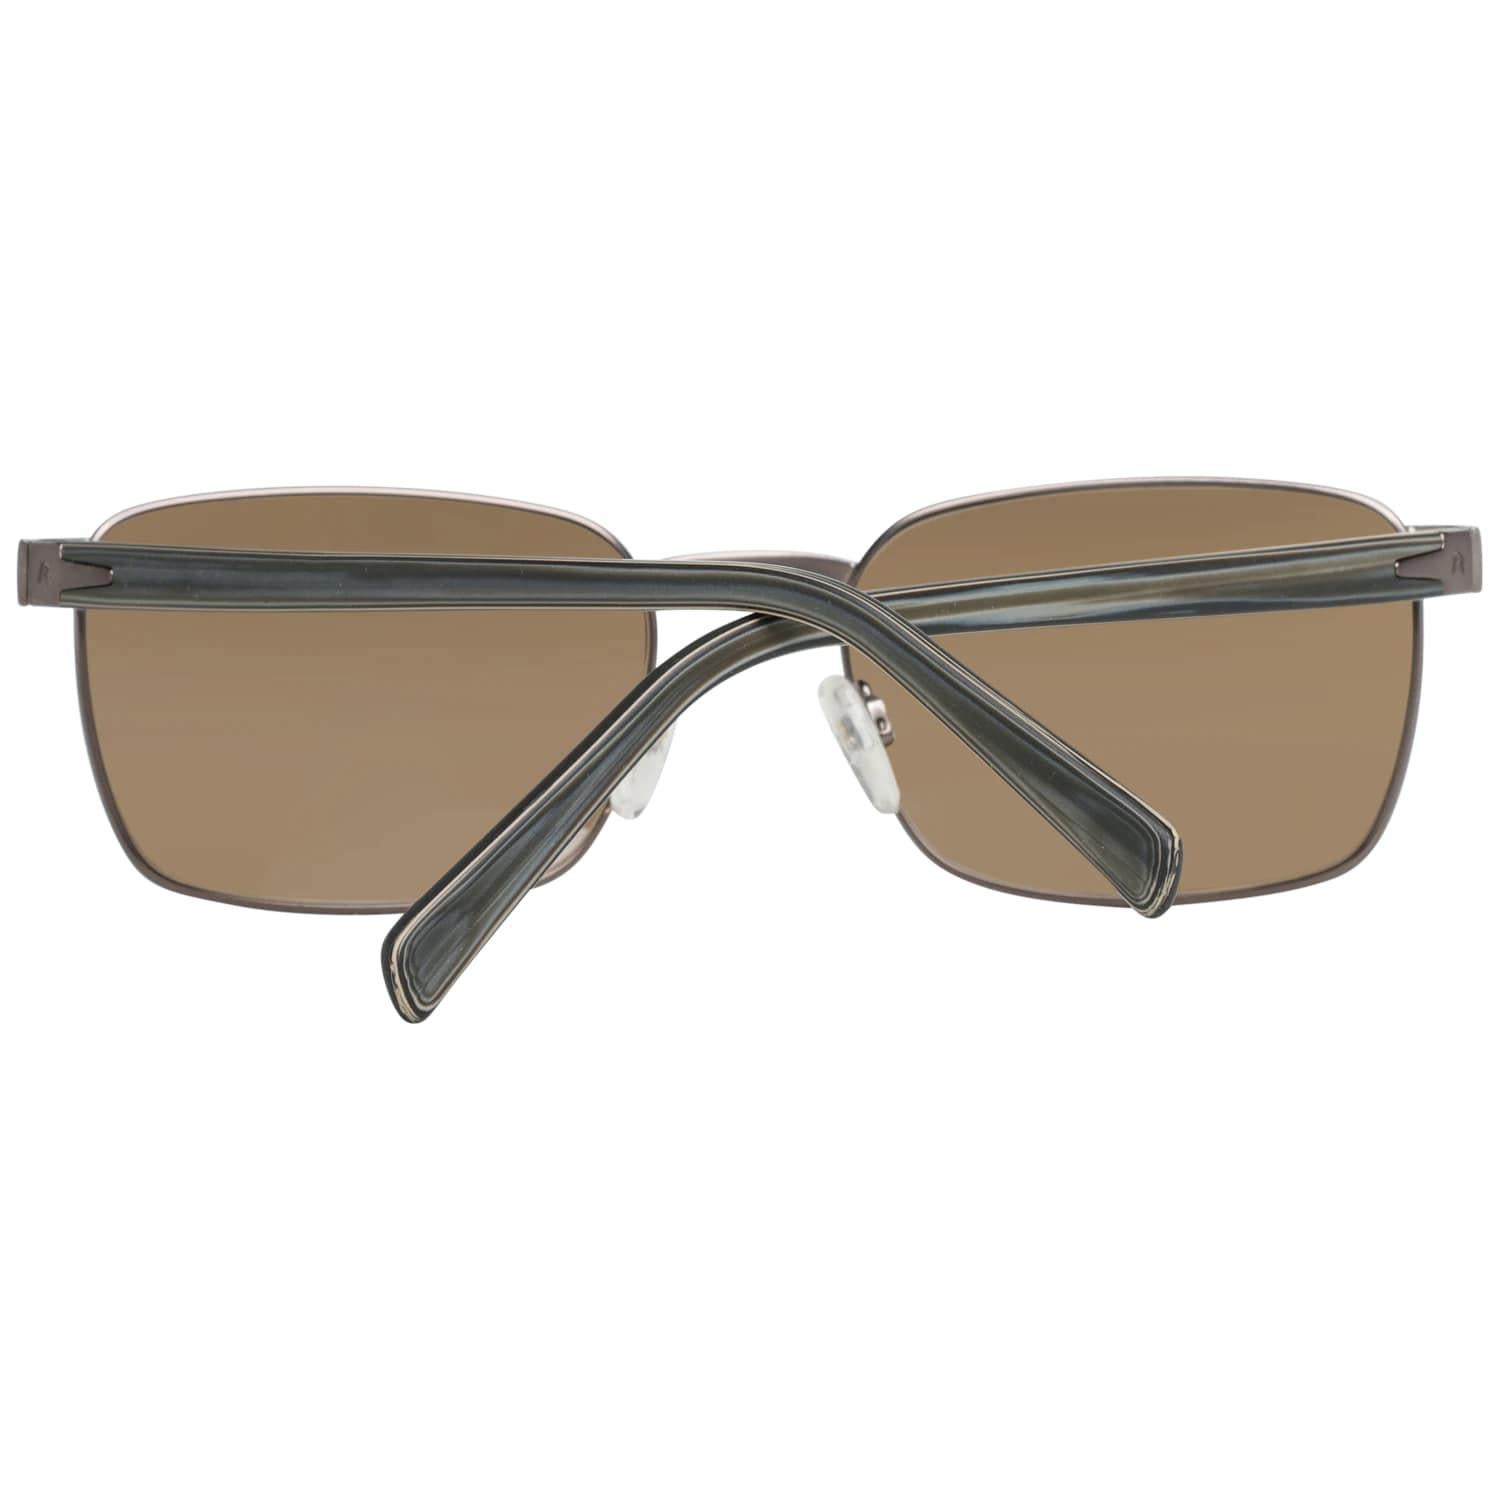 Rodenstock Mint Unisex Brown Sunglasses R1417 B 56 56-19-139 mm 3